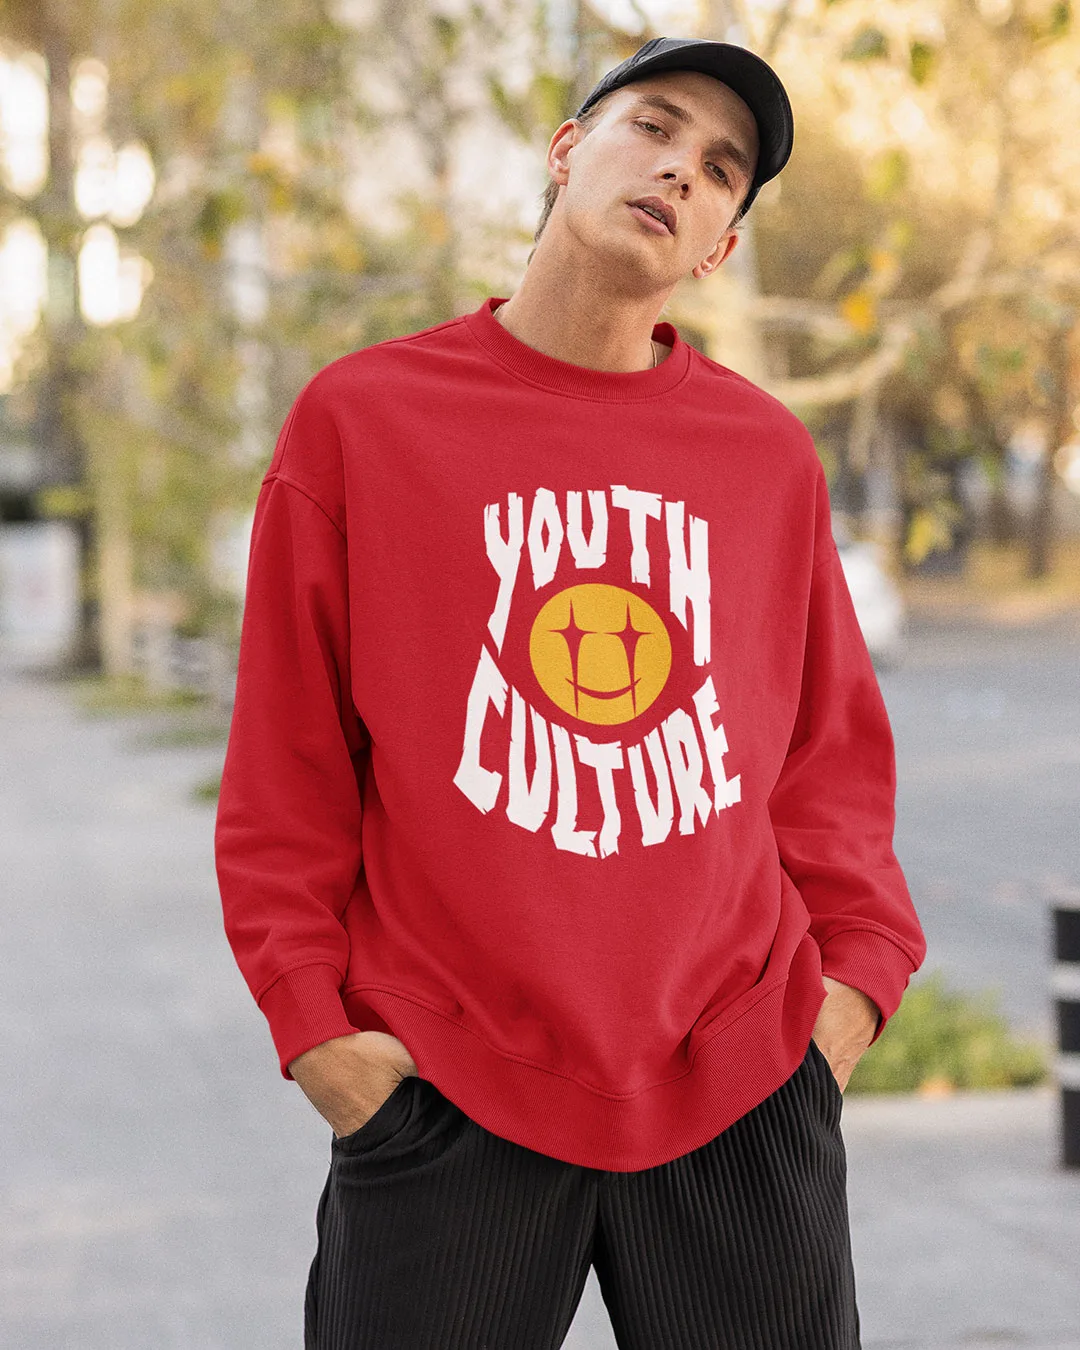 Men's Youth Culture Graphic Sweatshirt